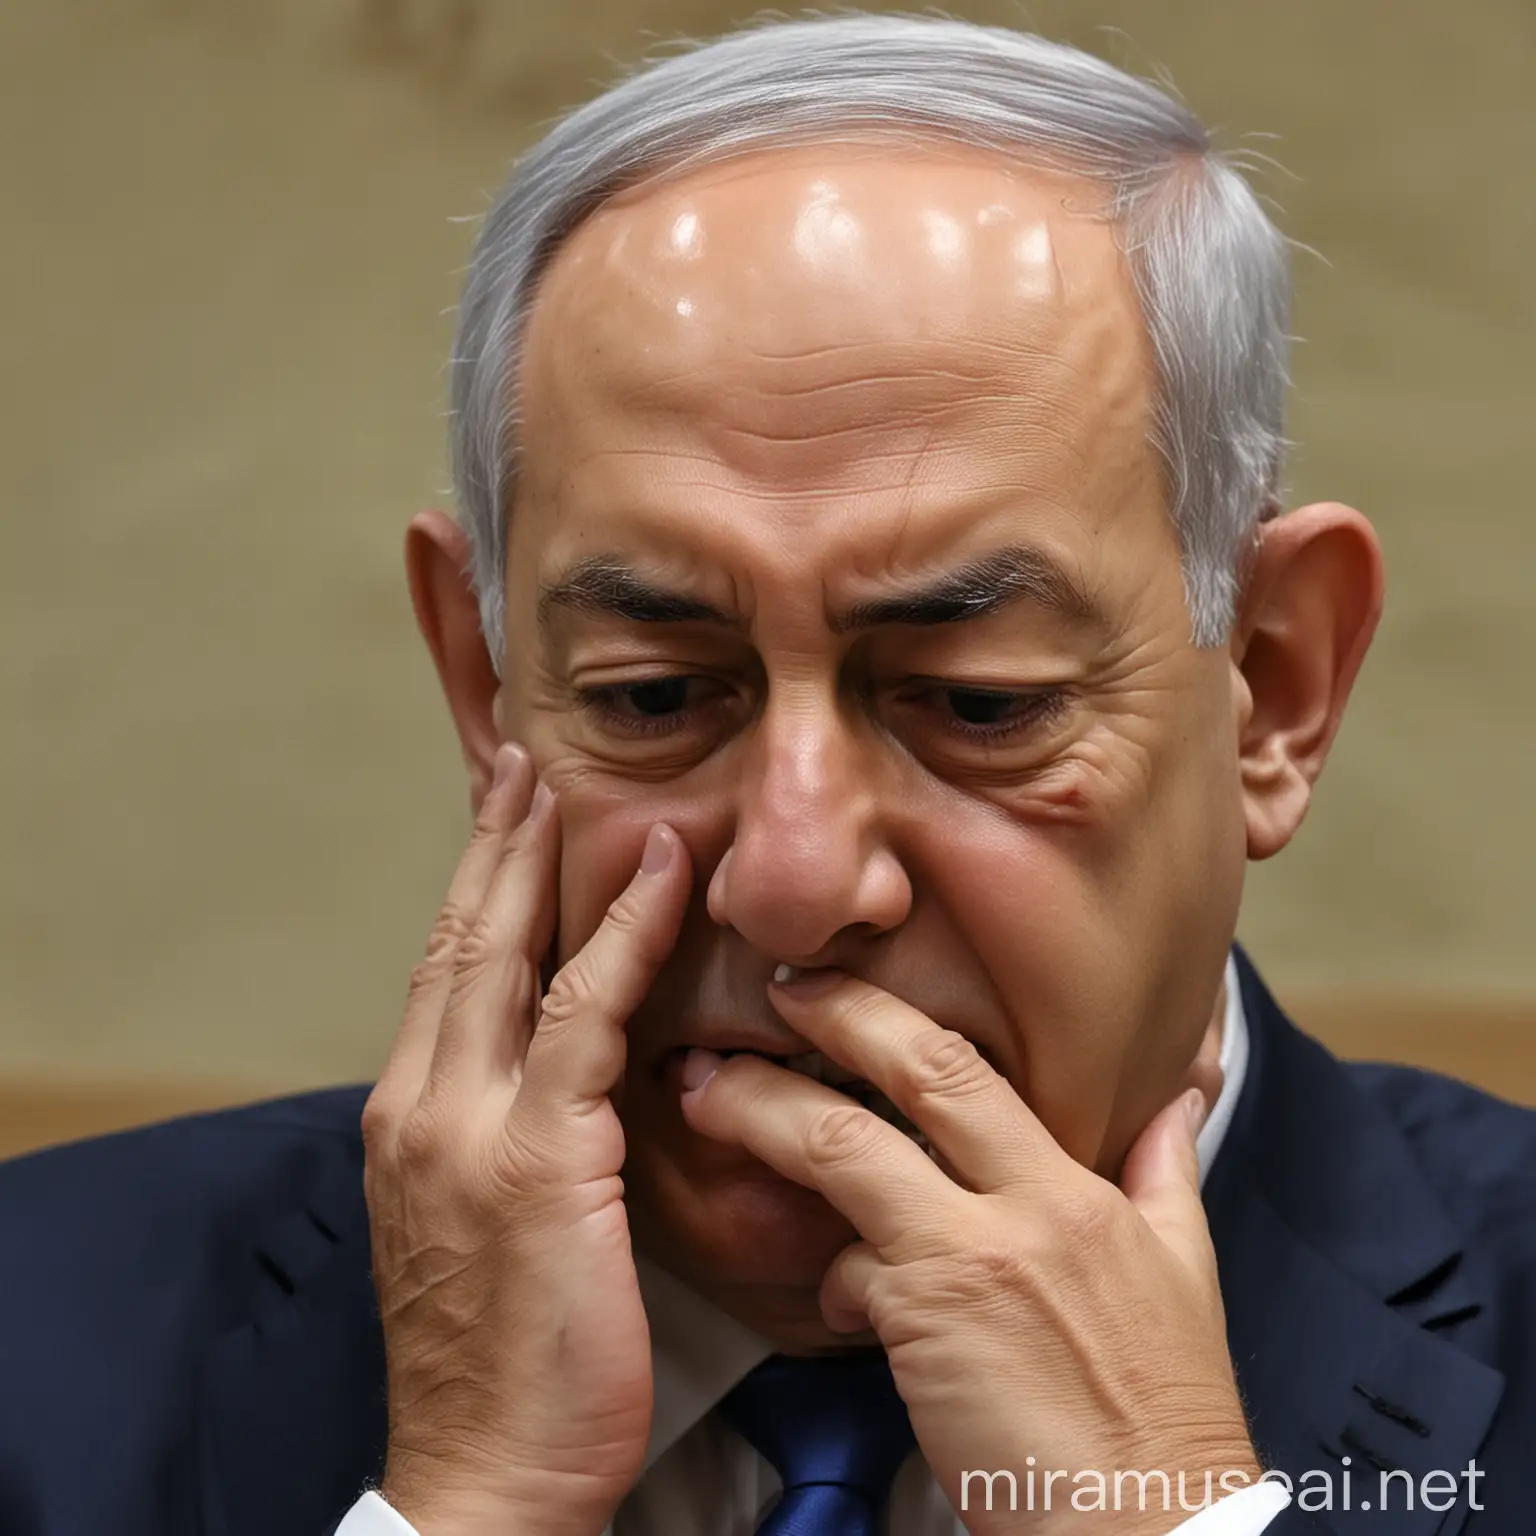 Benjamin Netanyahu in Tears After Iranian Attack